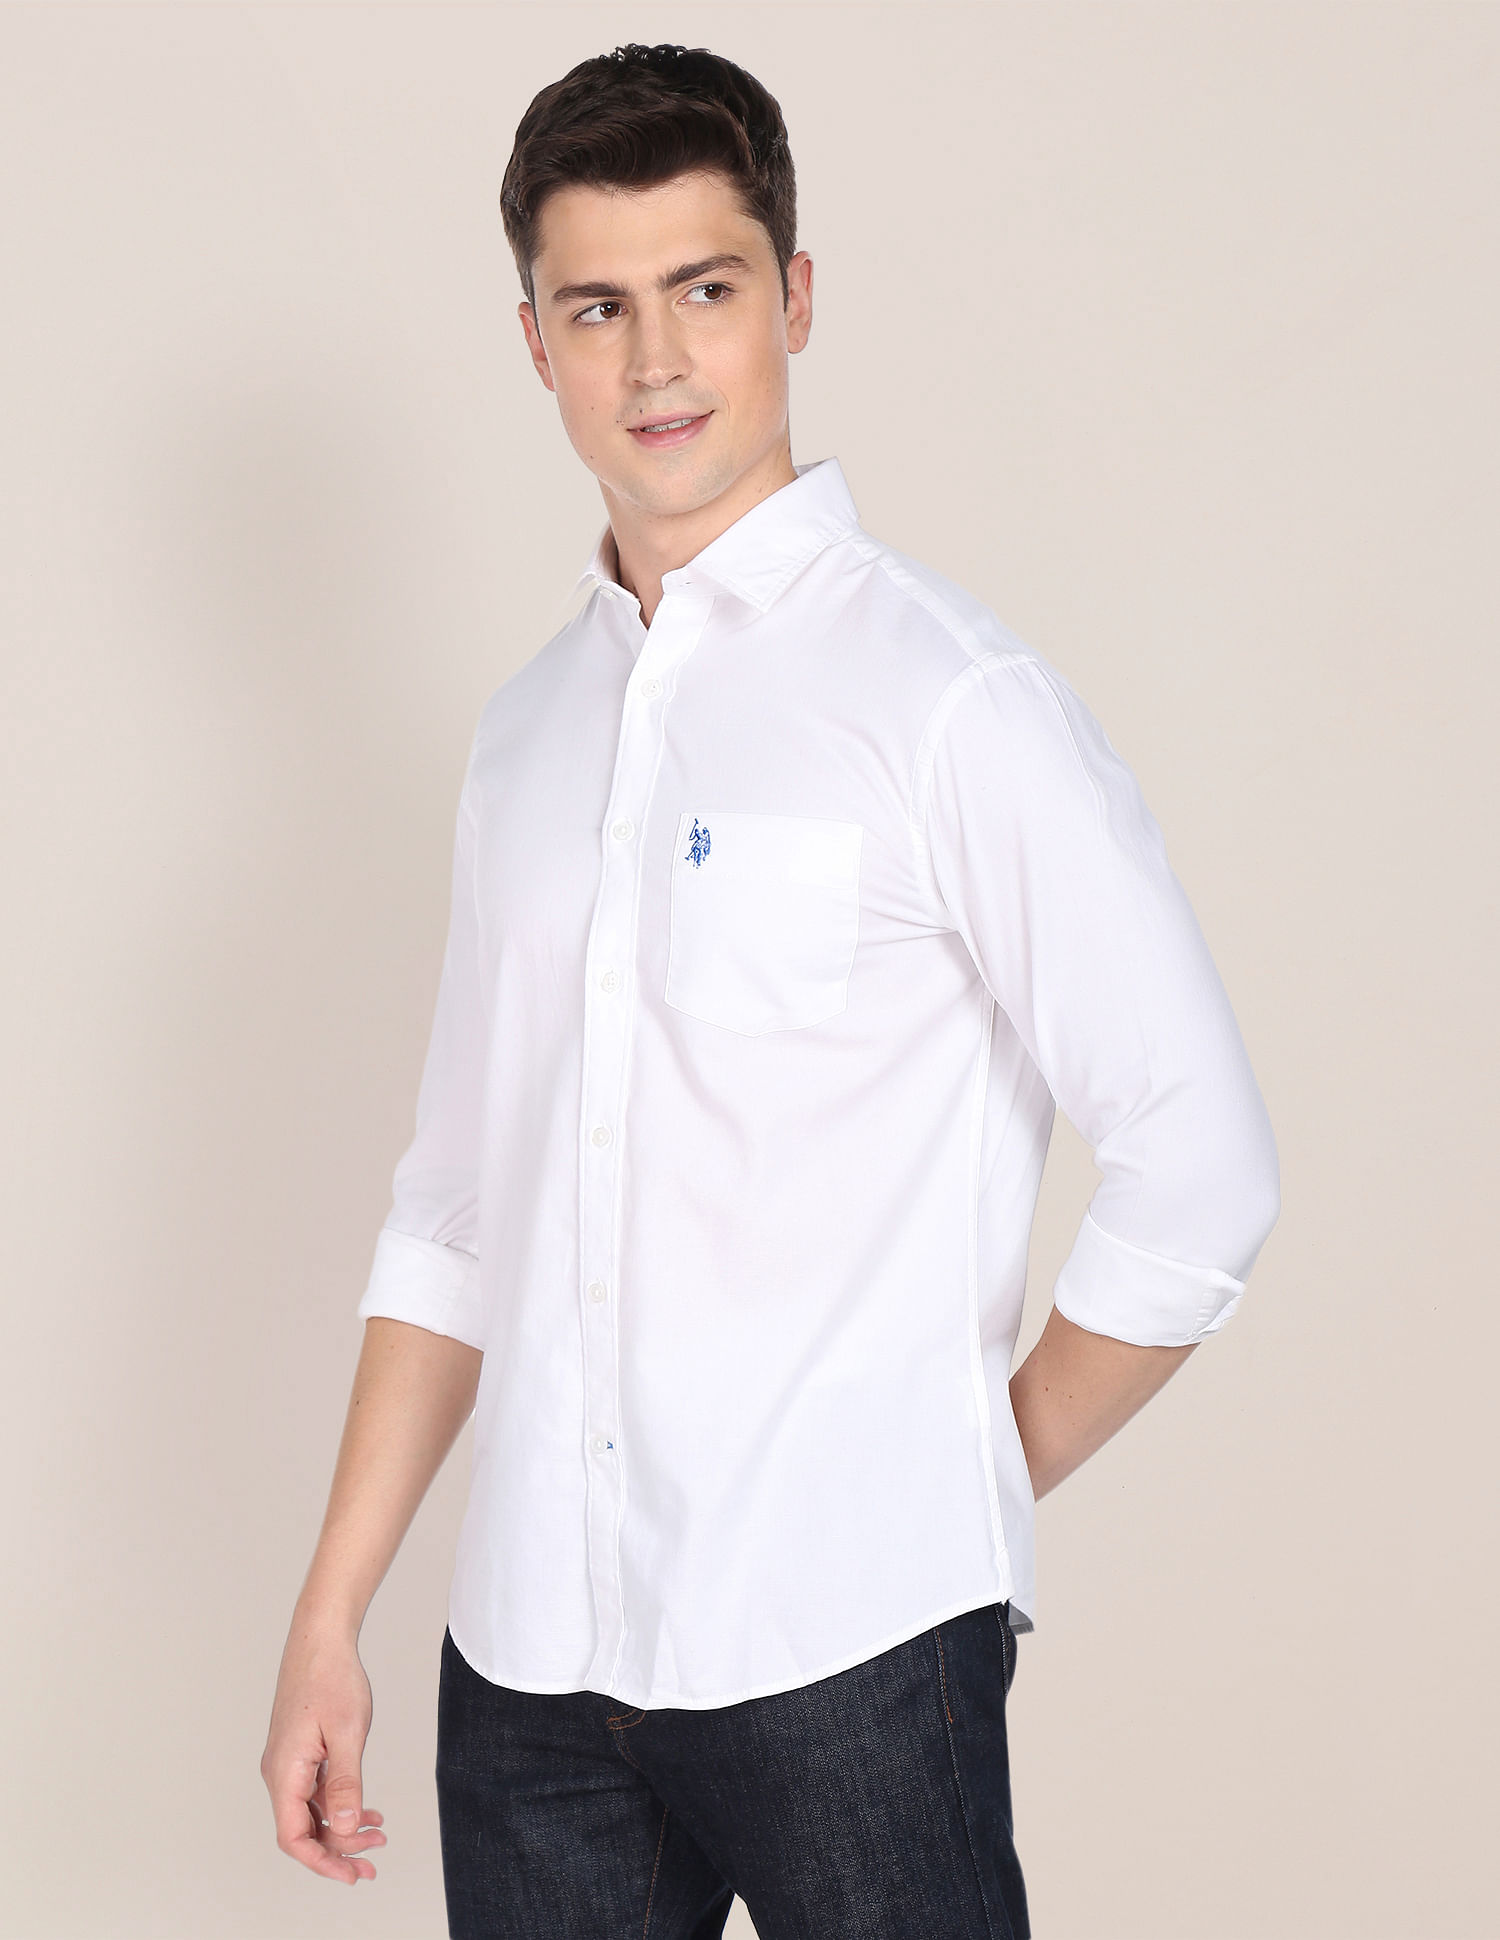 US POLO solid white cotton mens shirt - G3-MCS8847 